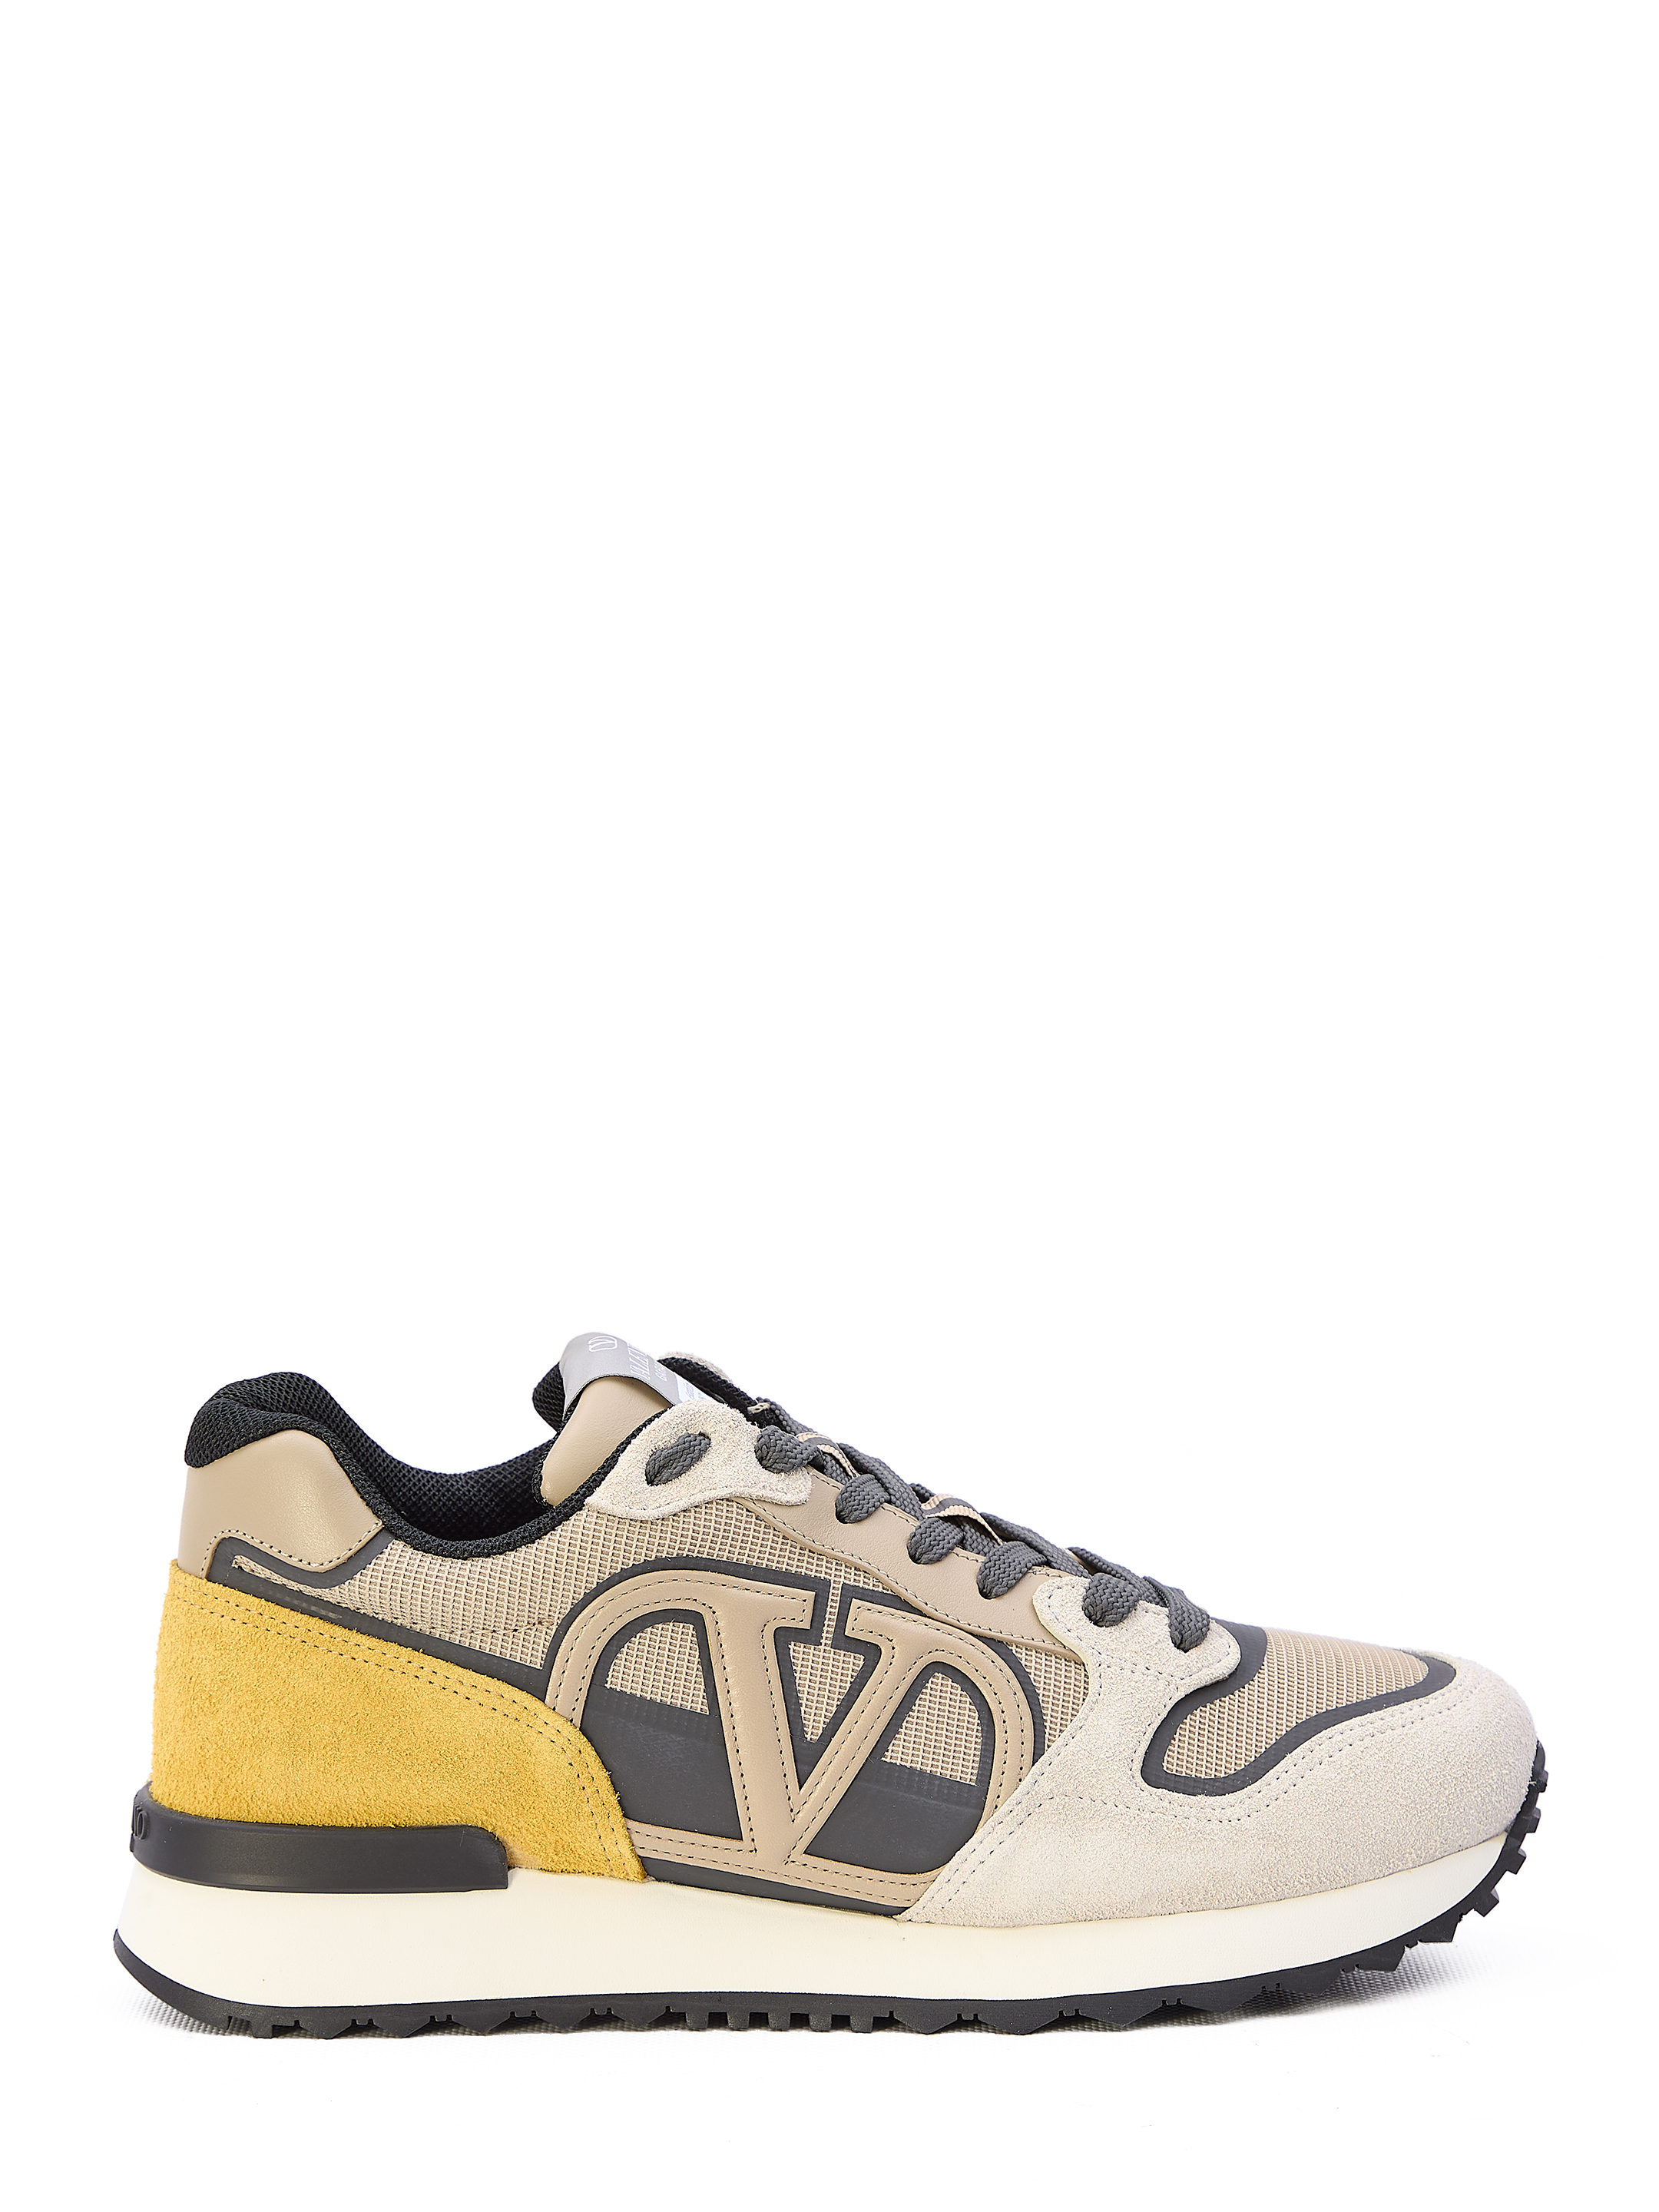 Кроссовки Valentino Garavani VLogo Pace, бежевый низкие кроссовки ms 2960 из ткани и спилка valentino garavani